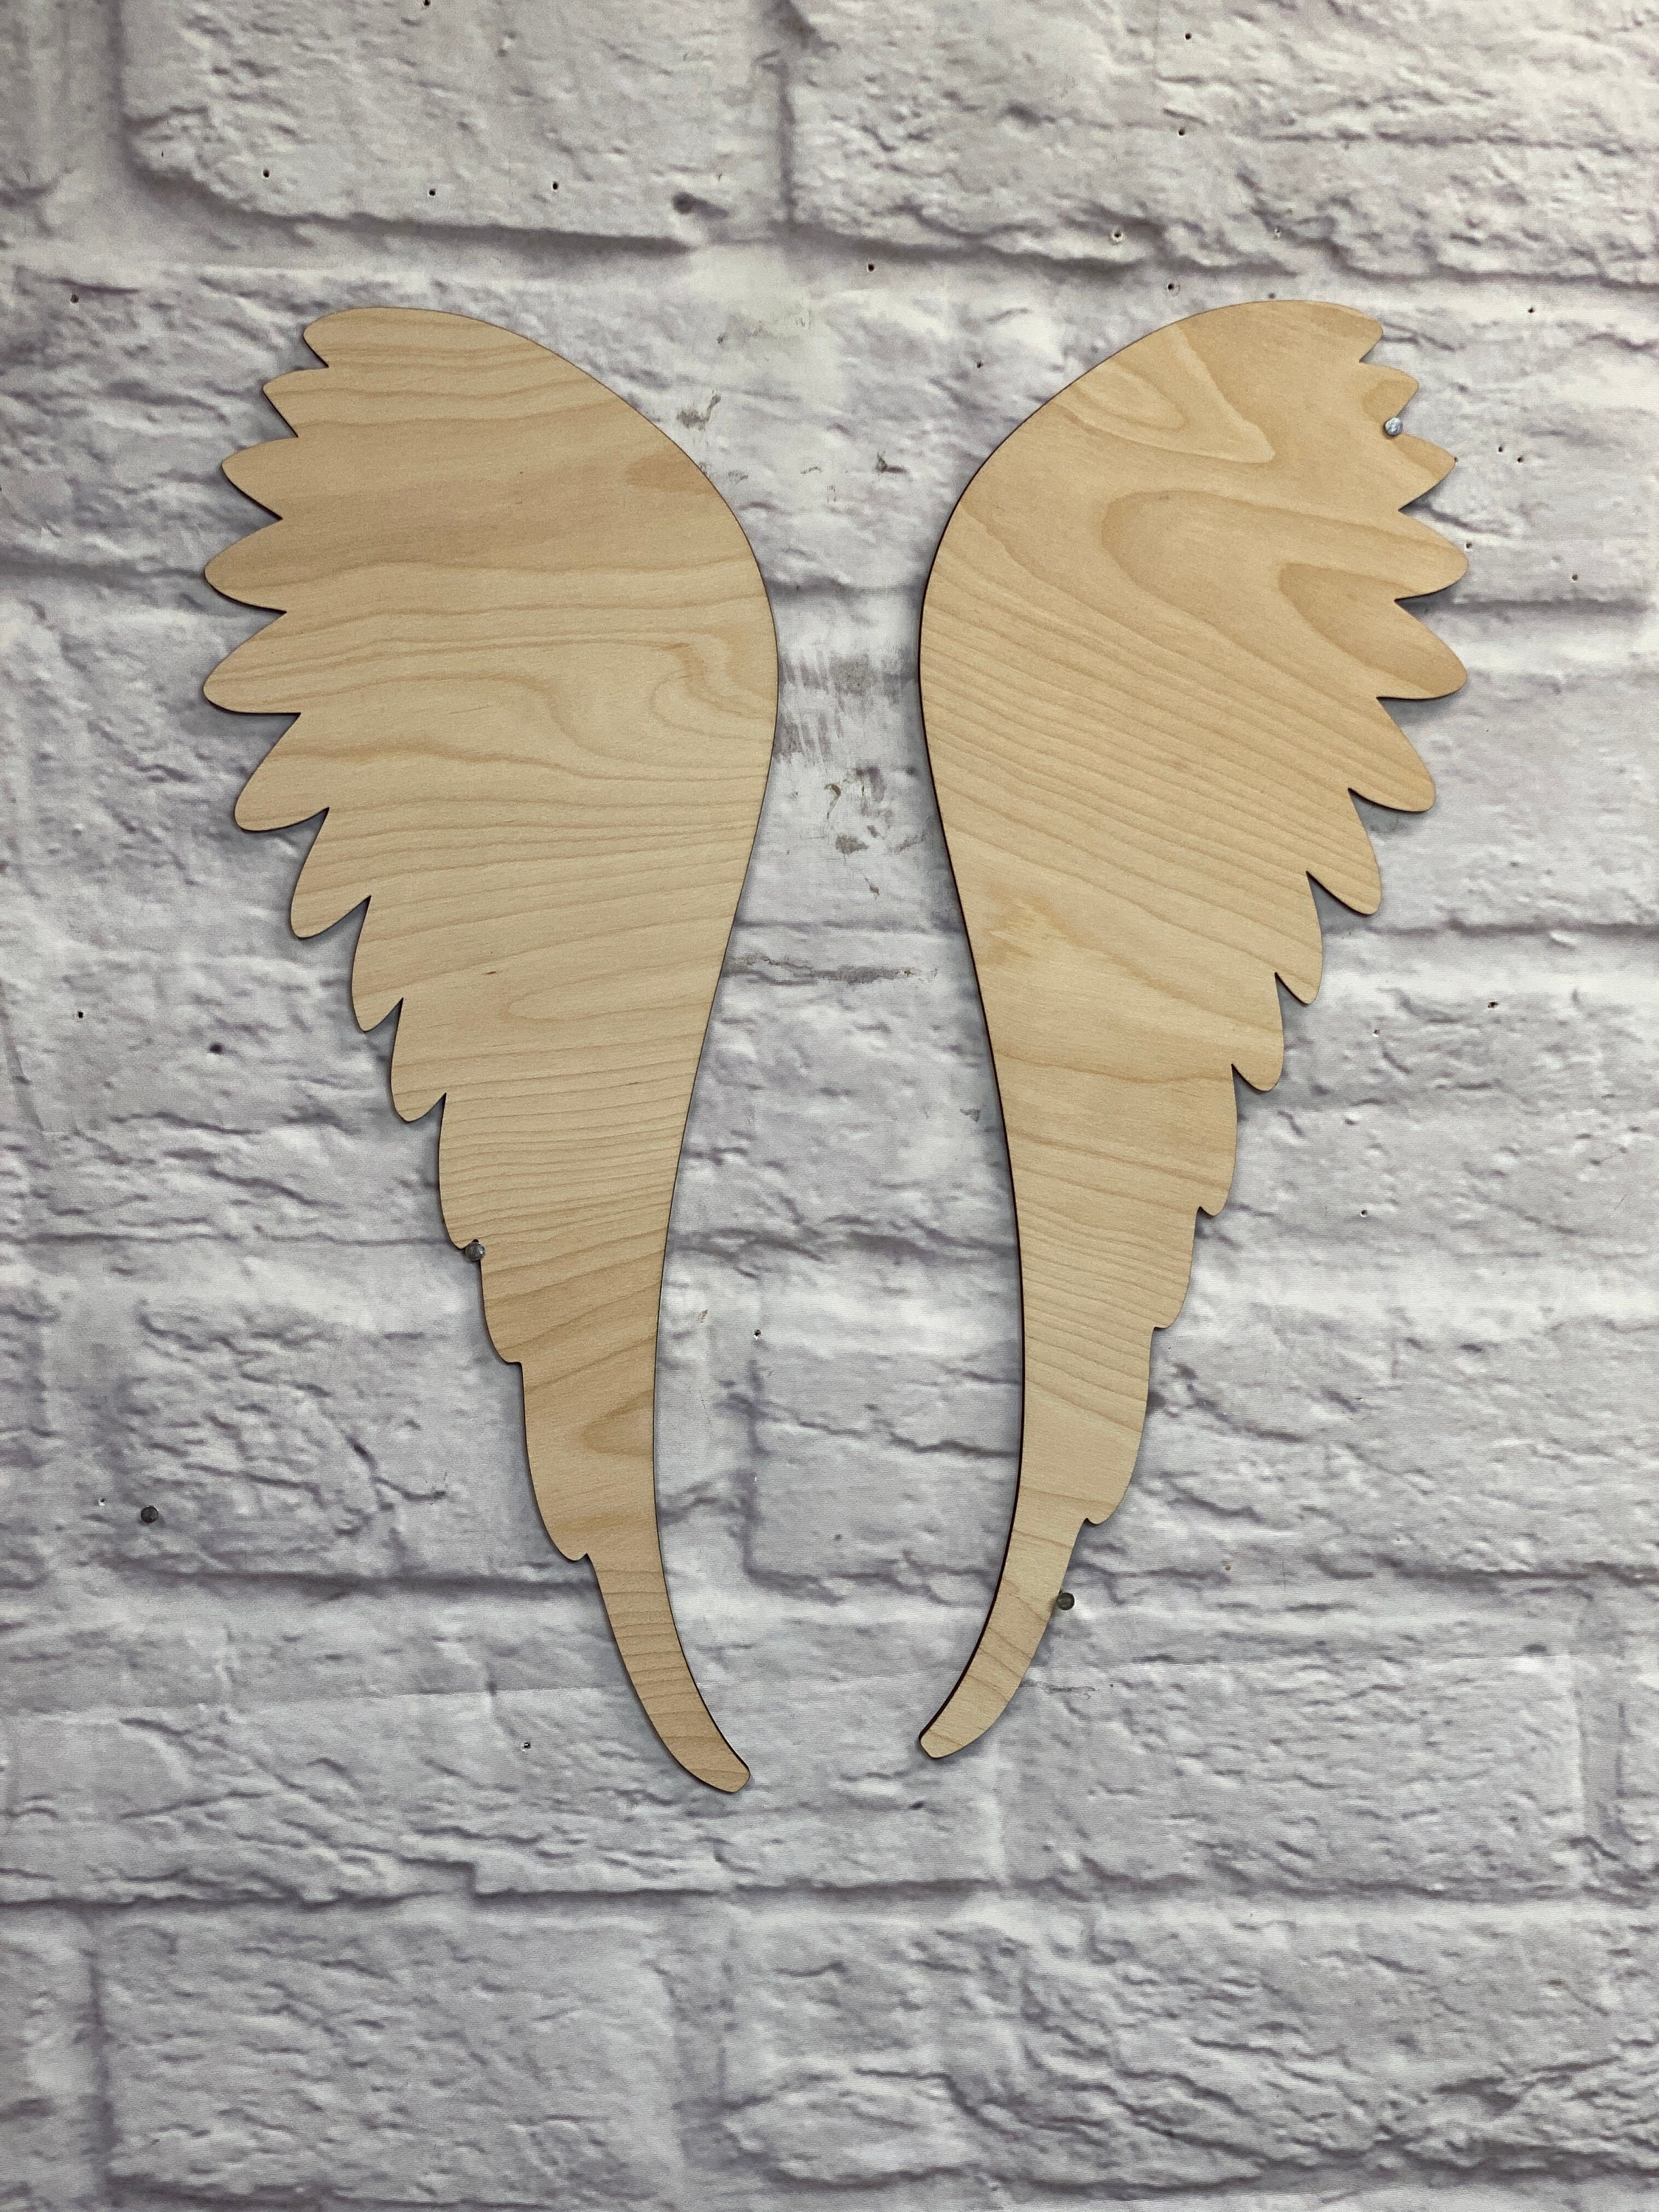 Angel Wing Heart Mum MDF Angel wings Wooden Angel wings Craft Blank